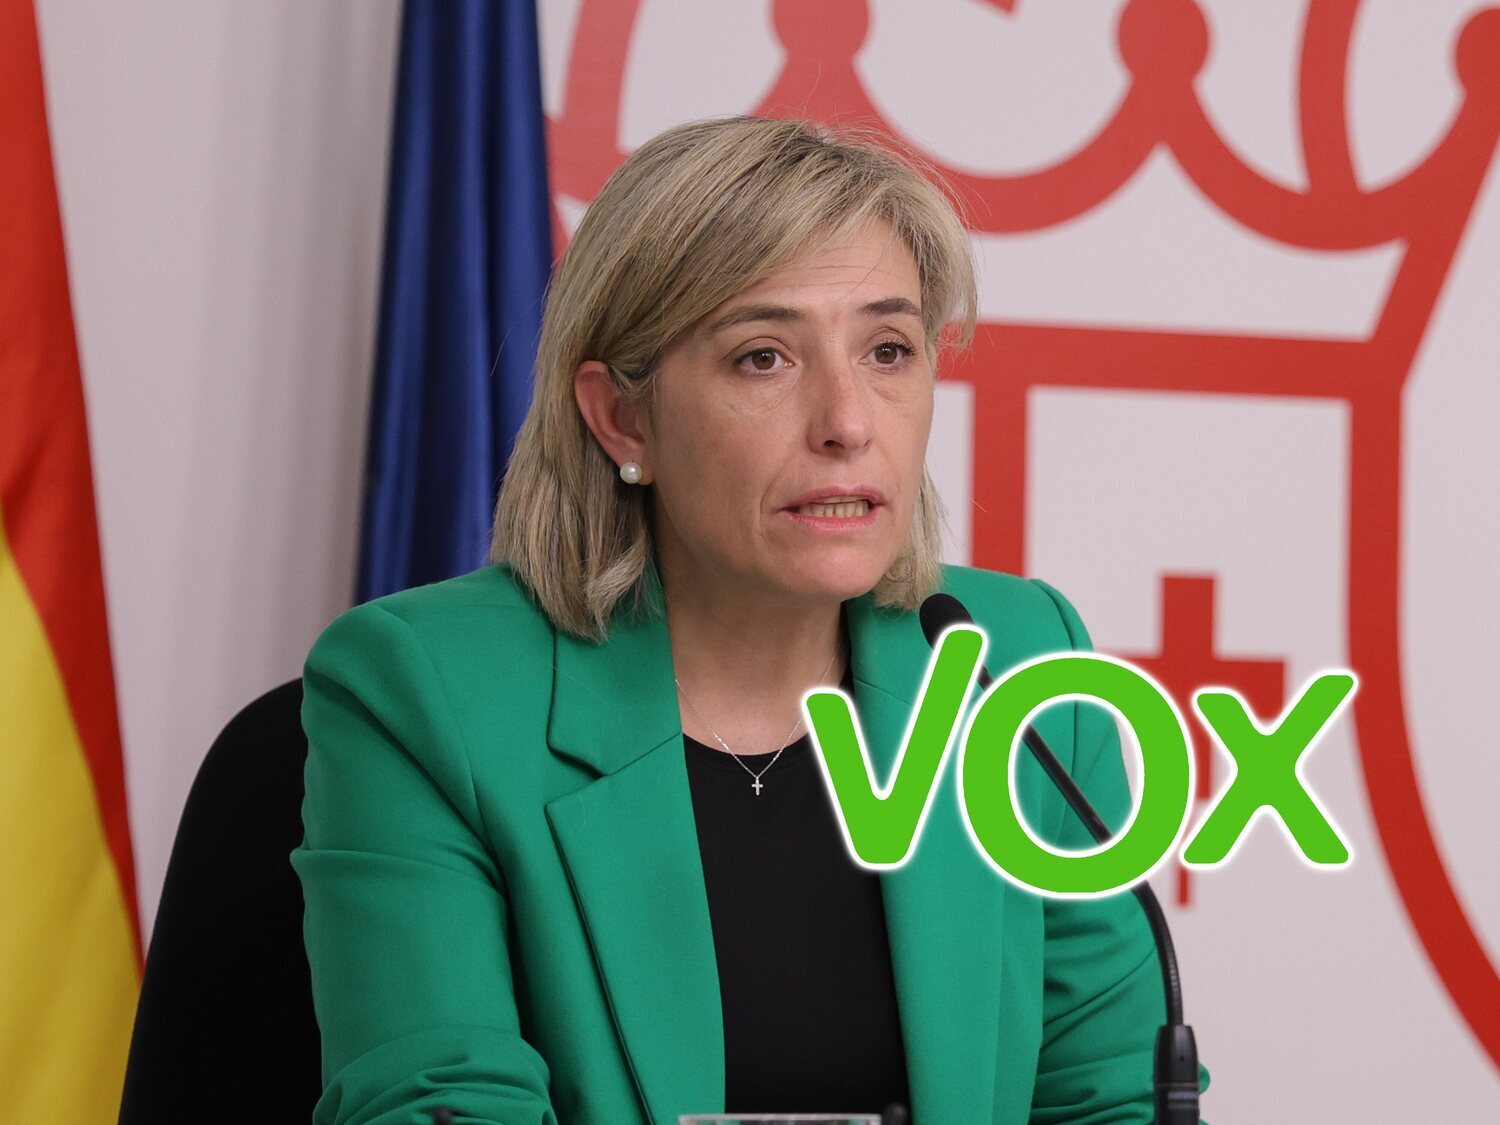 Elisa Núñez, consellera de VOX, afirma que Franco es "un personaje histórico": sus polémicas